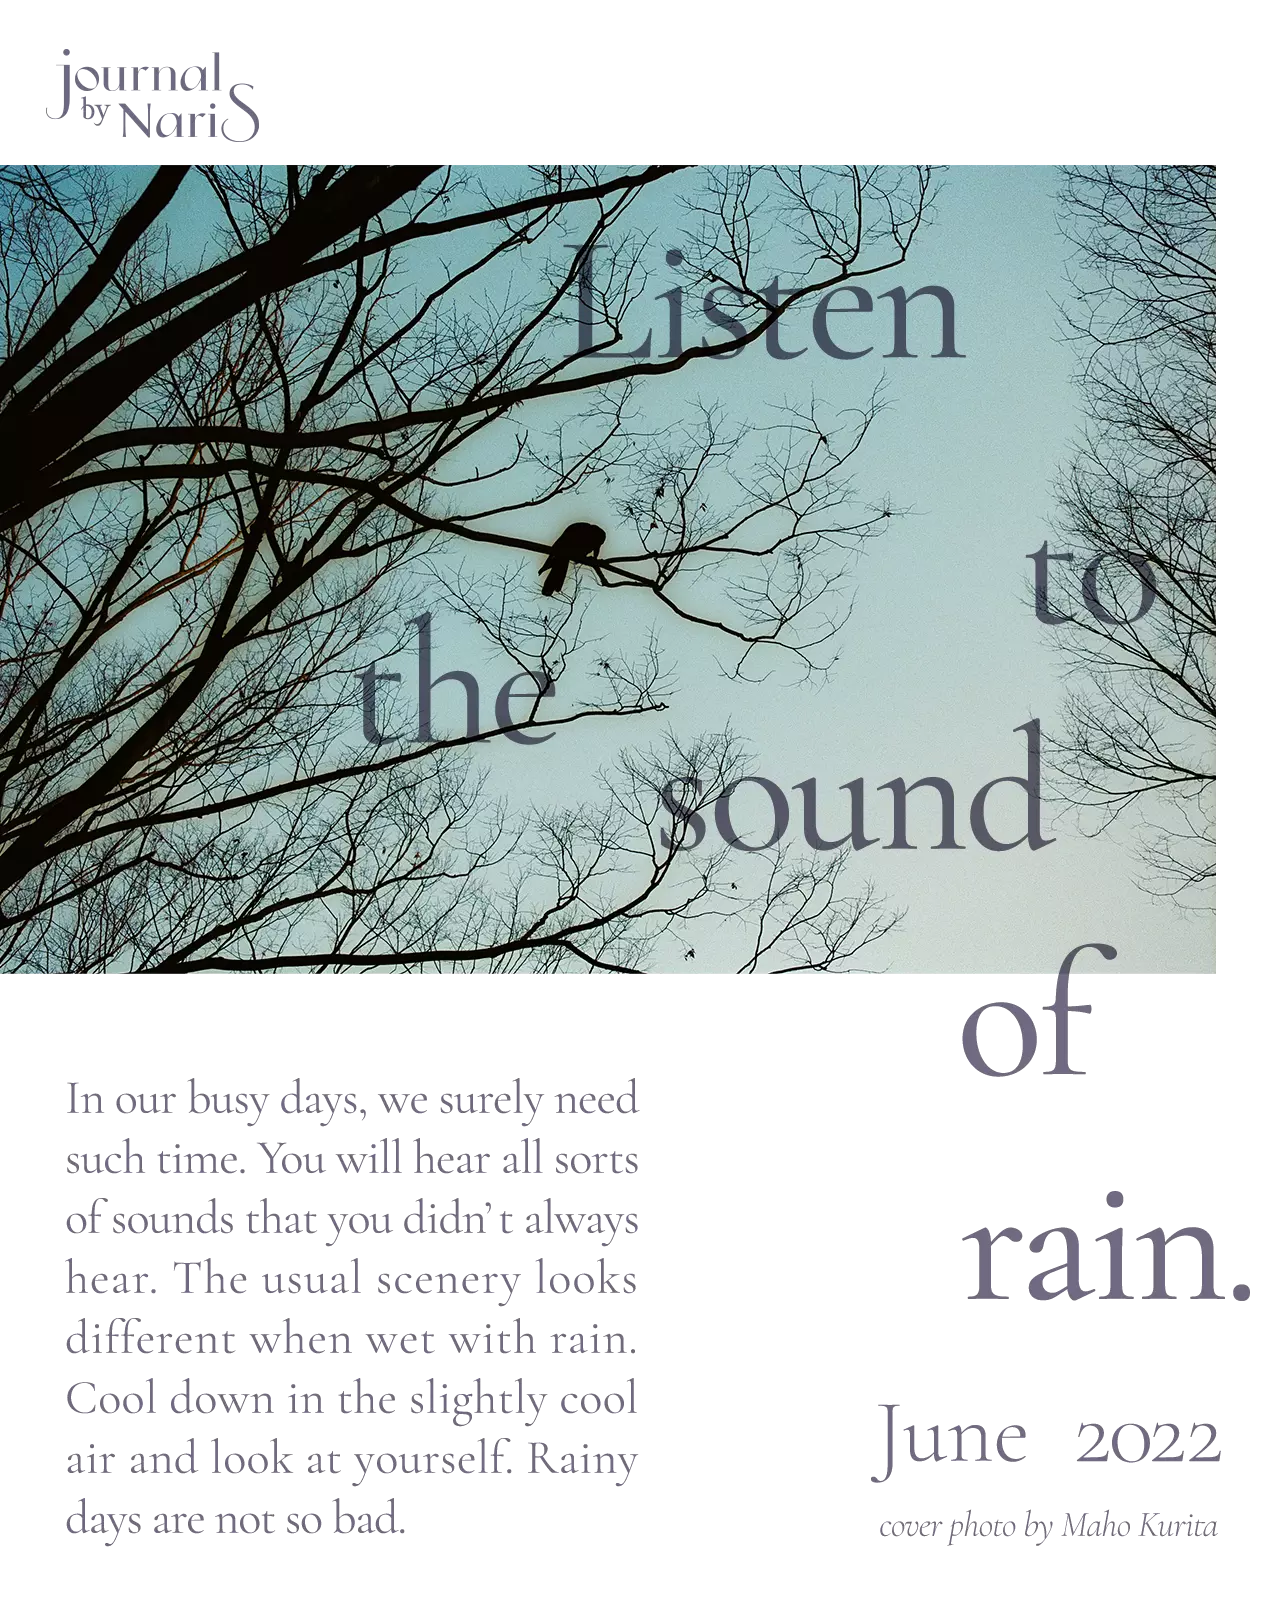 Listen to the sound of rain.